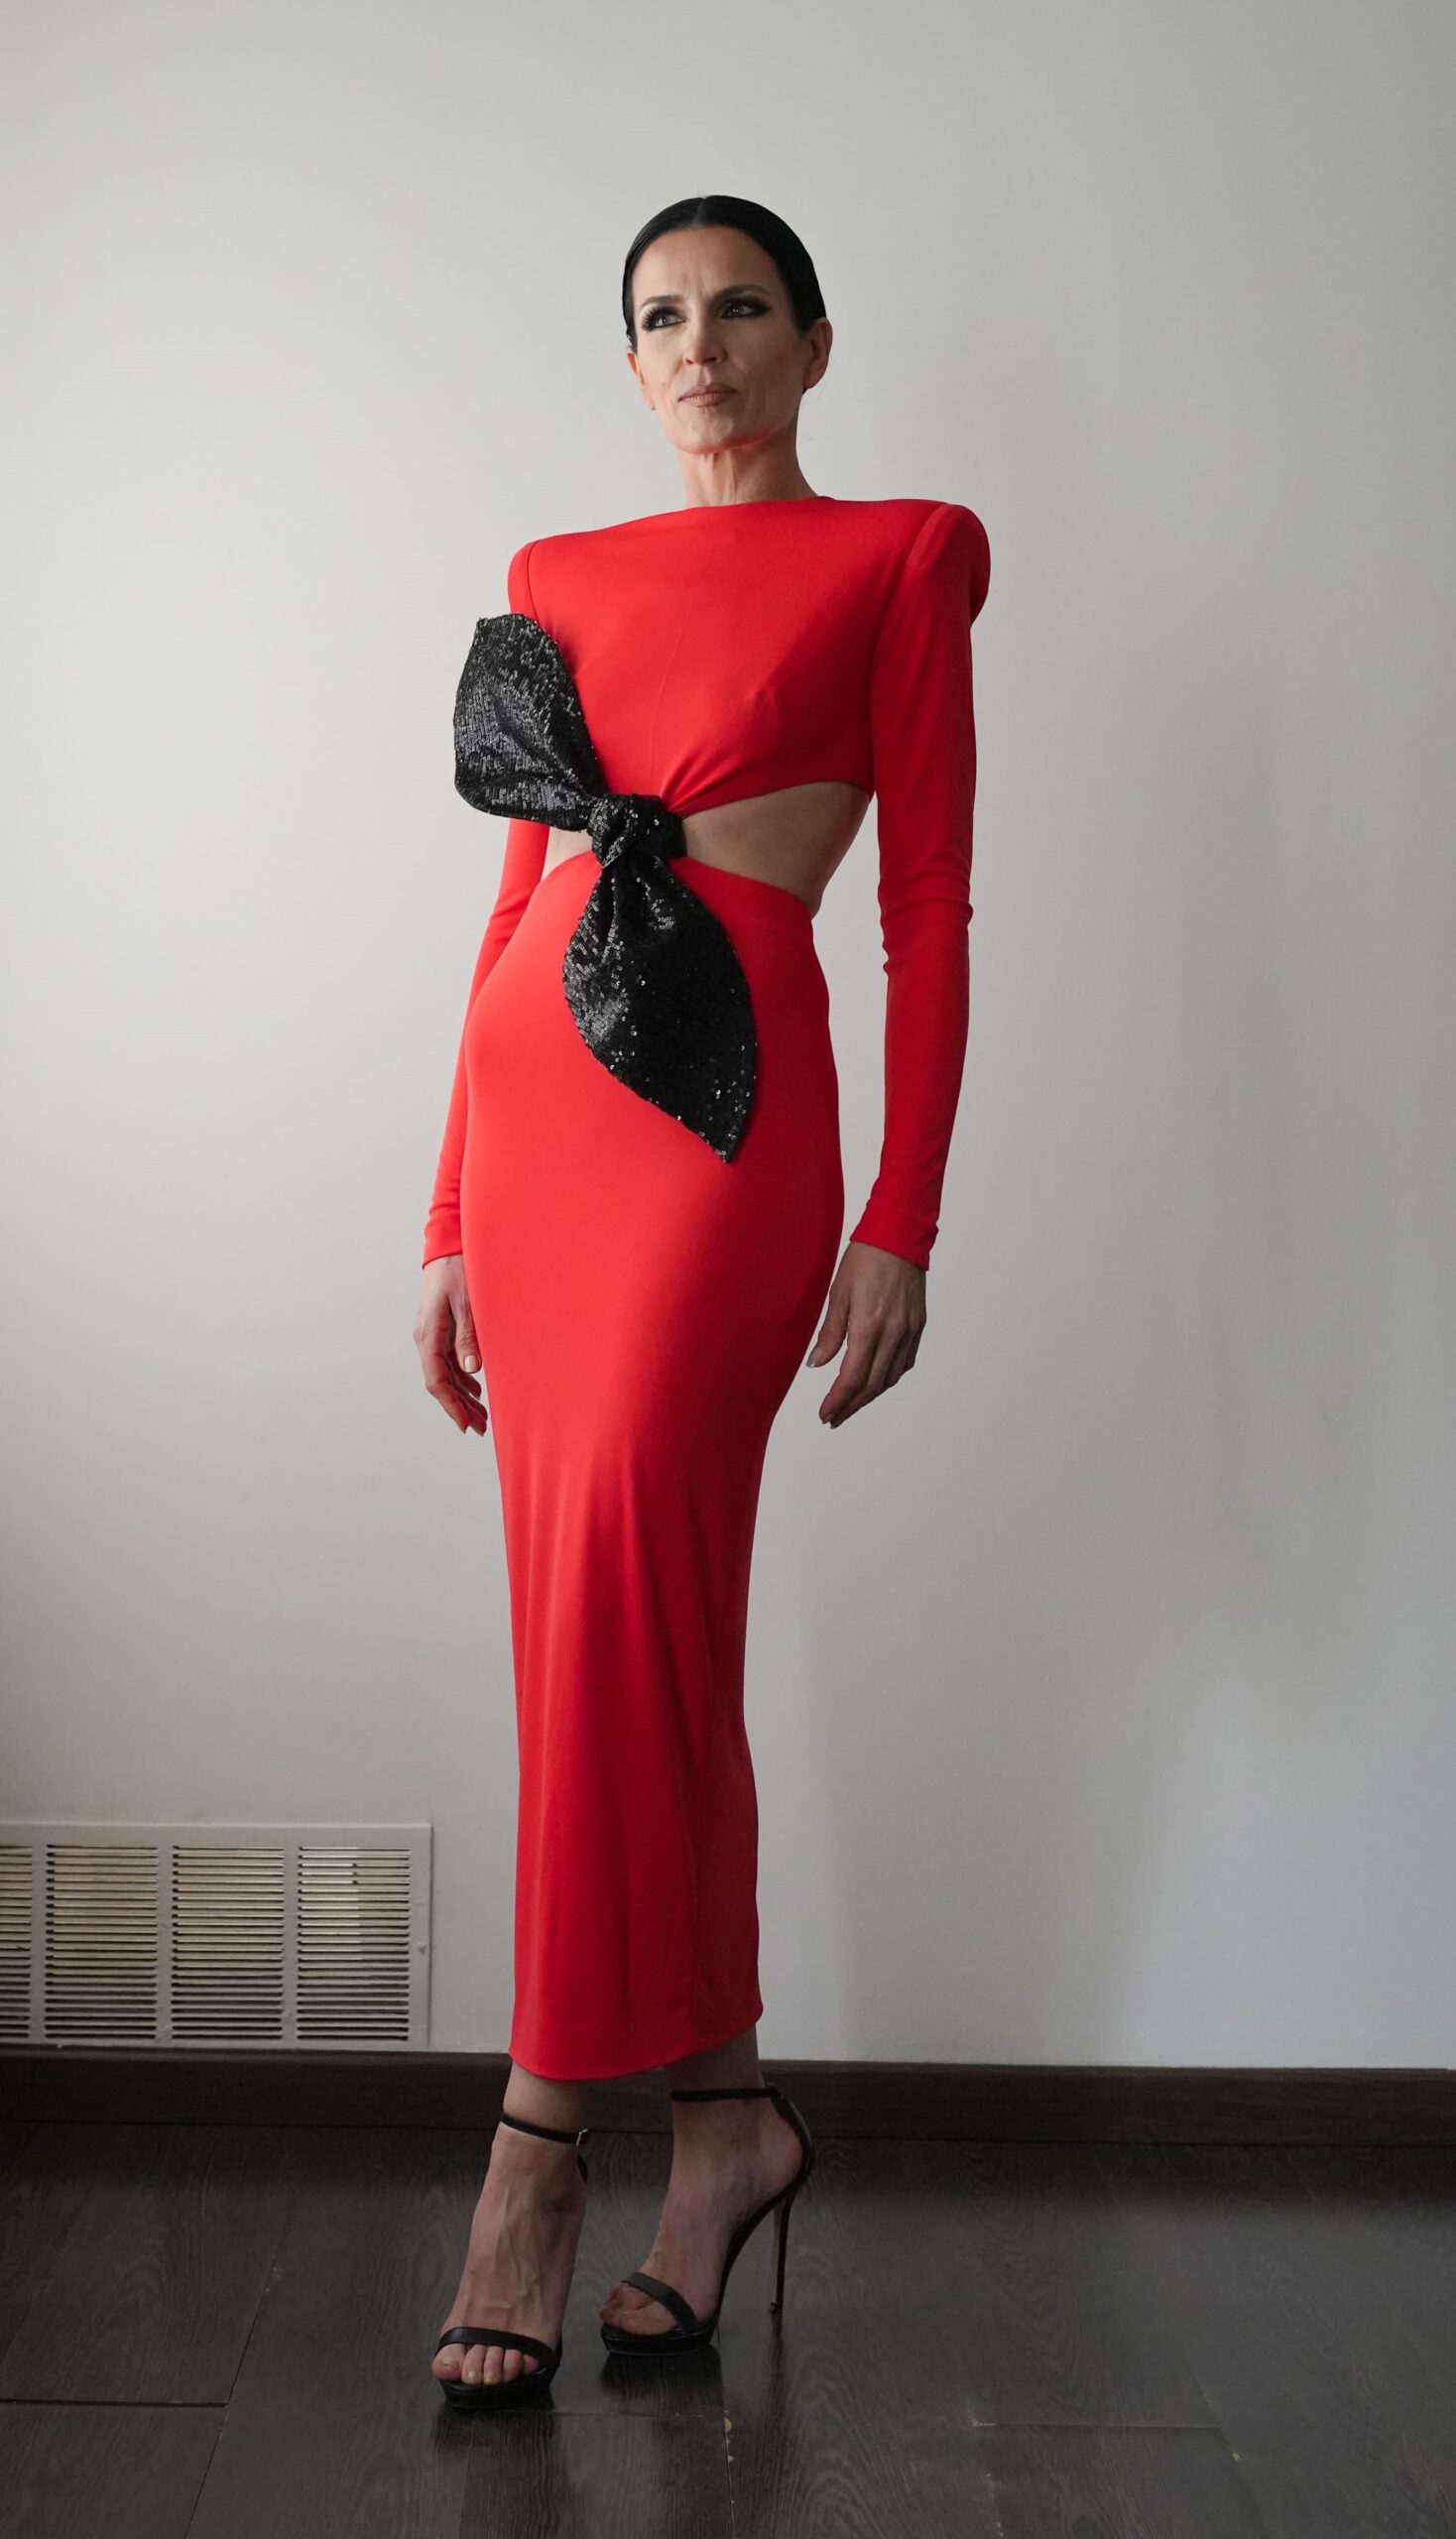 184-Bow-dress-Veintitres.01-Collection-Flamenco-Fashion-1.jpg